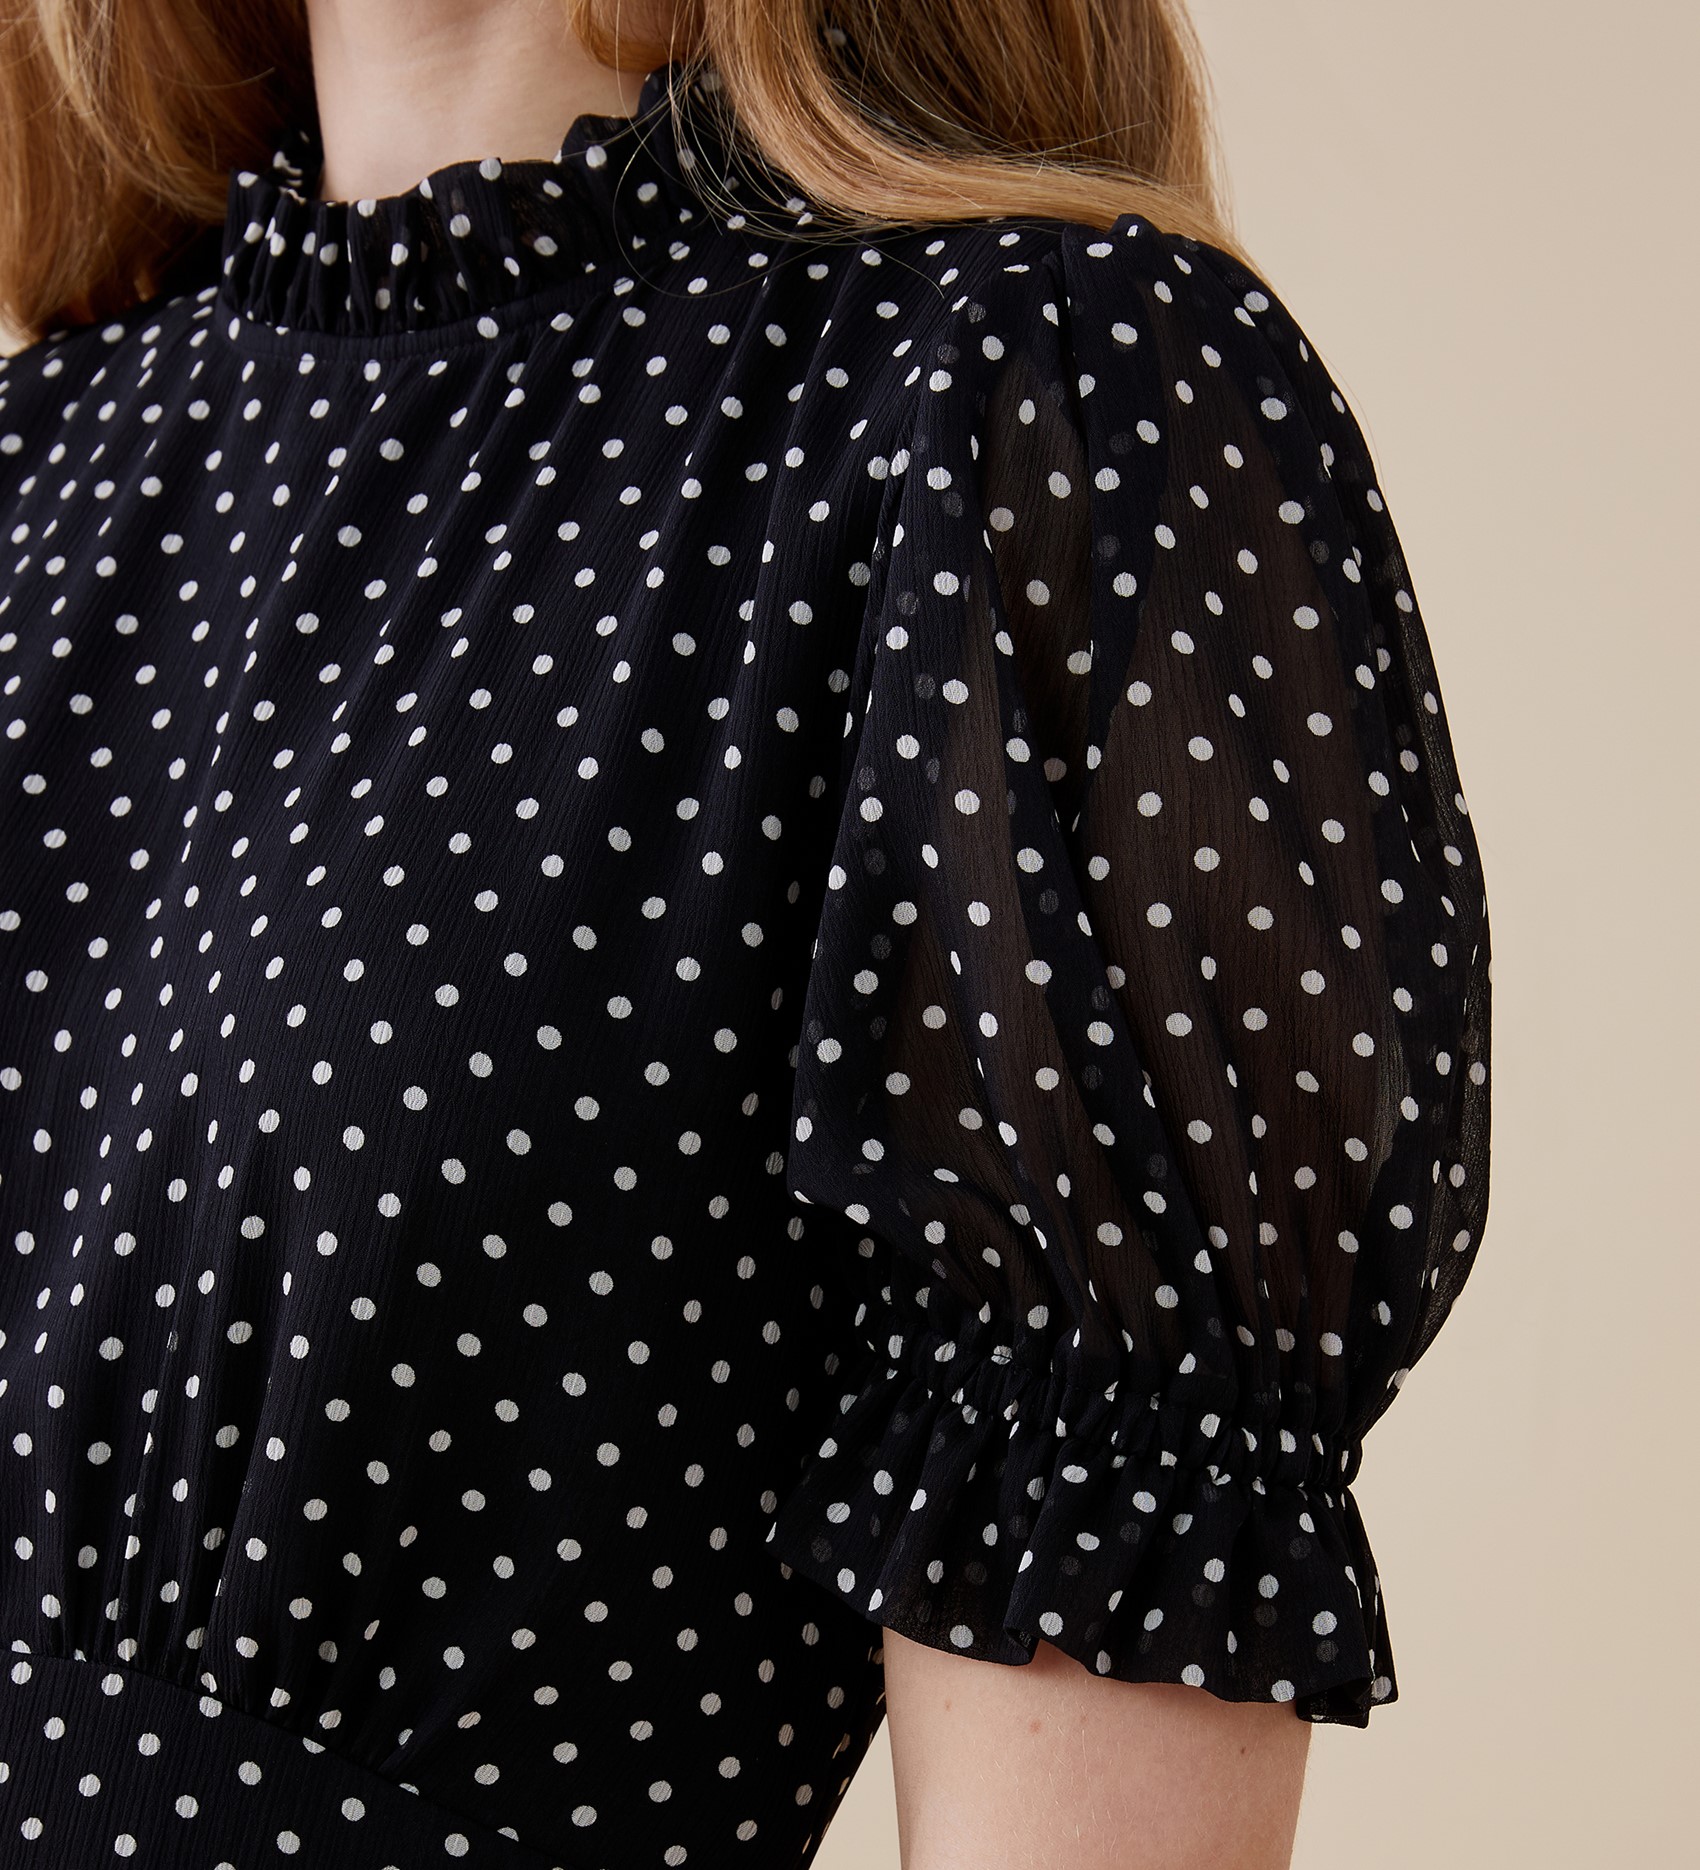 Camille Black Spot Dress | Finery London